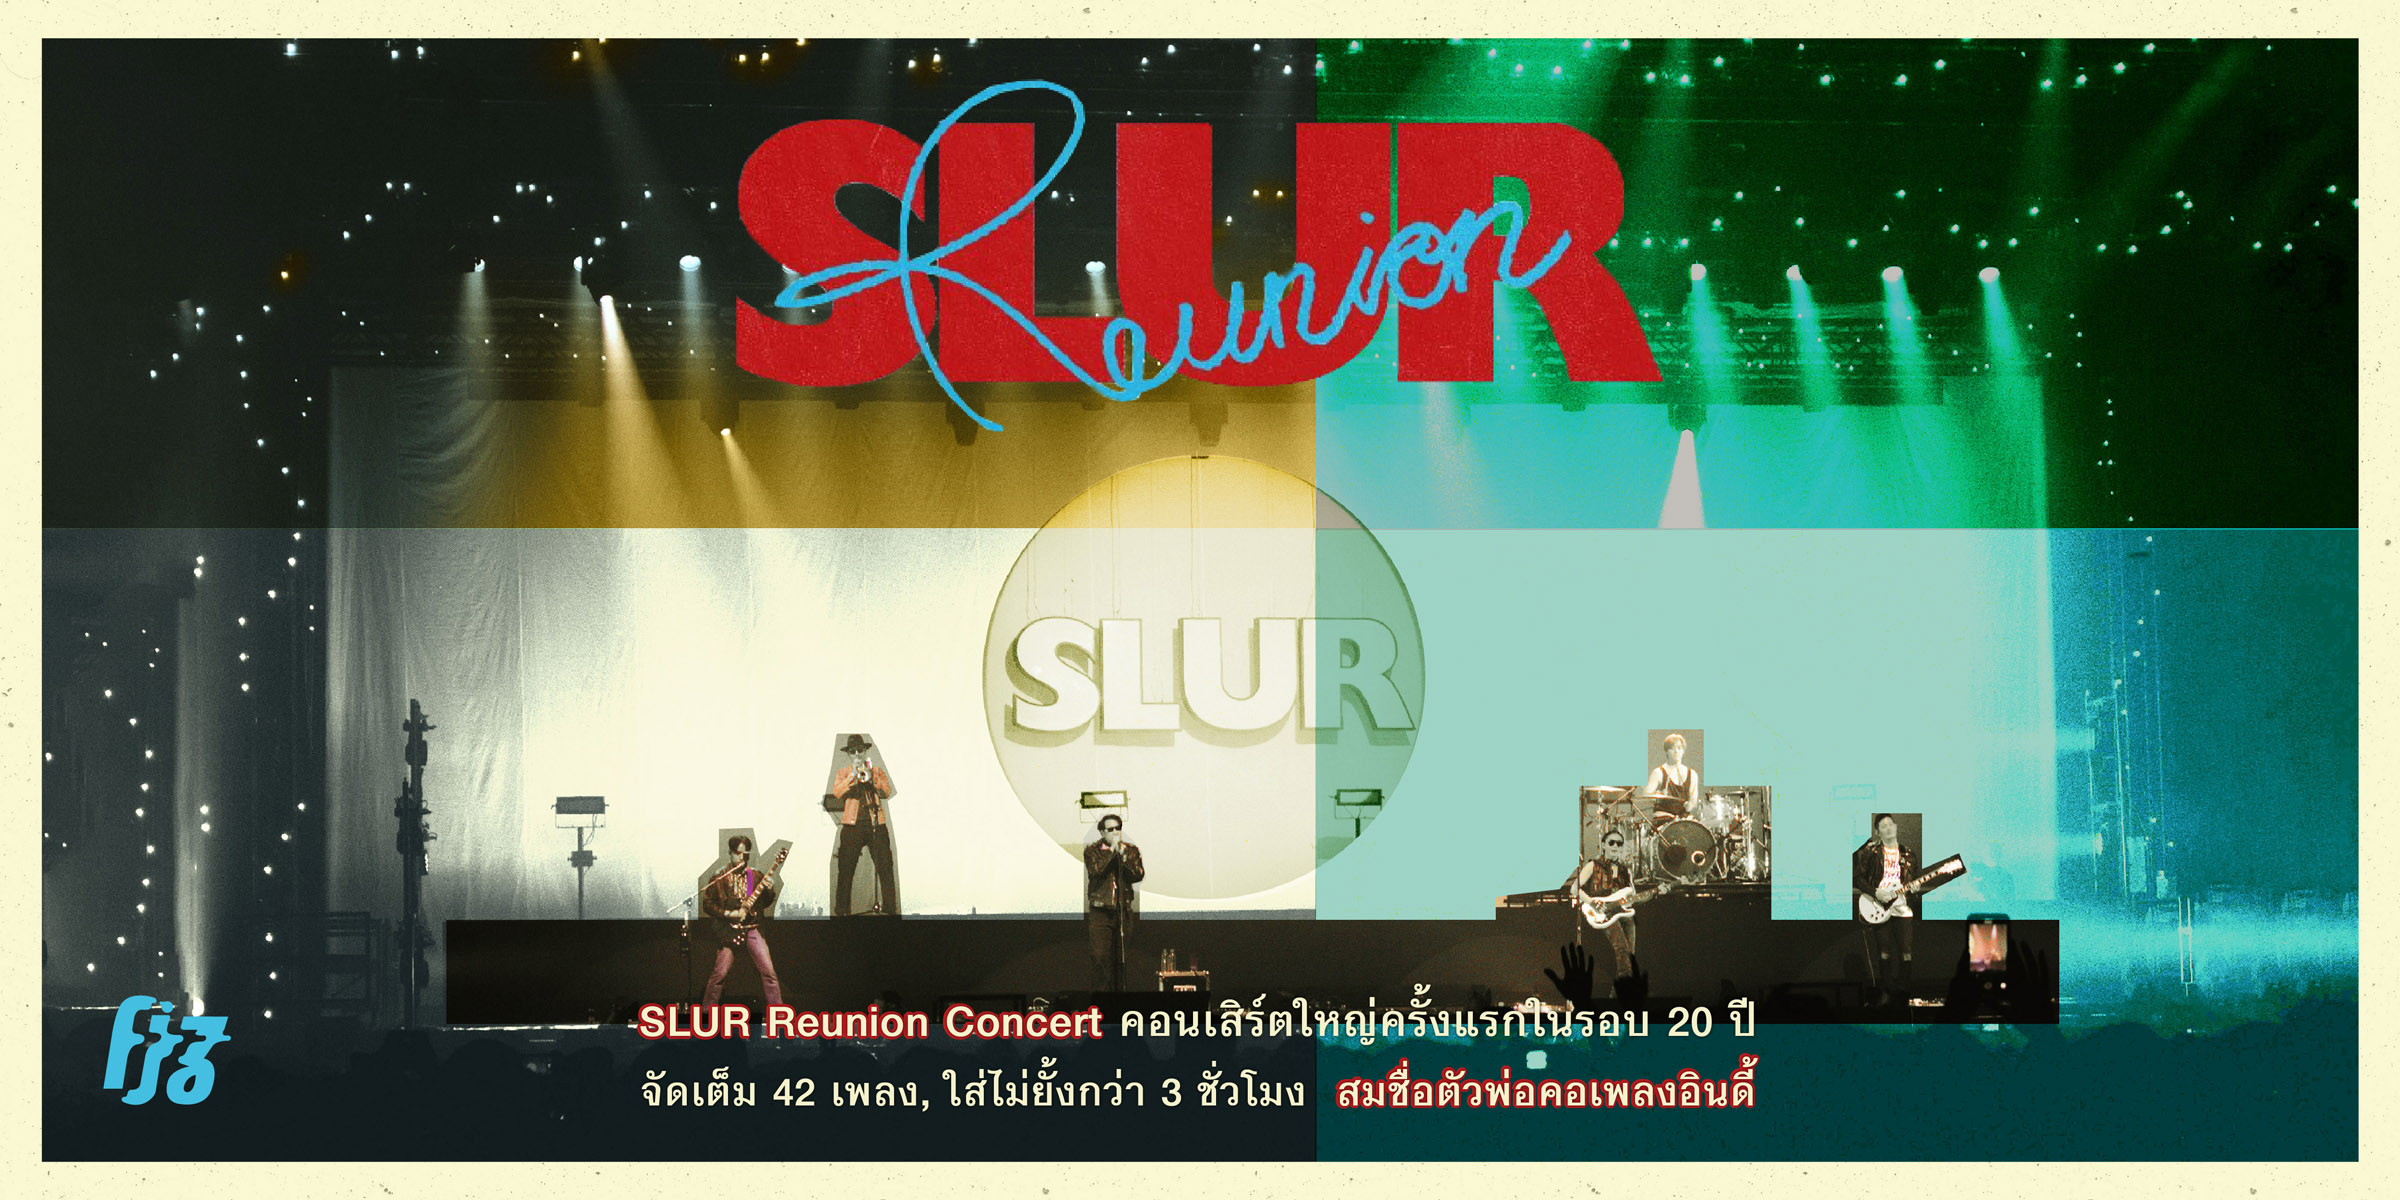 SLUR Reunion Concert คอนเสิร์ตใหญ่ครั้งแรกในรอบ 20 ปี, จัดเต็ม 42 เพลง, ใส่ไม่ยั้งกว่า 3 ชั่วโมง สมชื่อตัวพ่อคอเพลงอินดี้